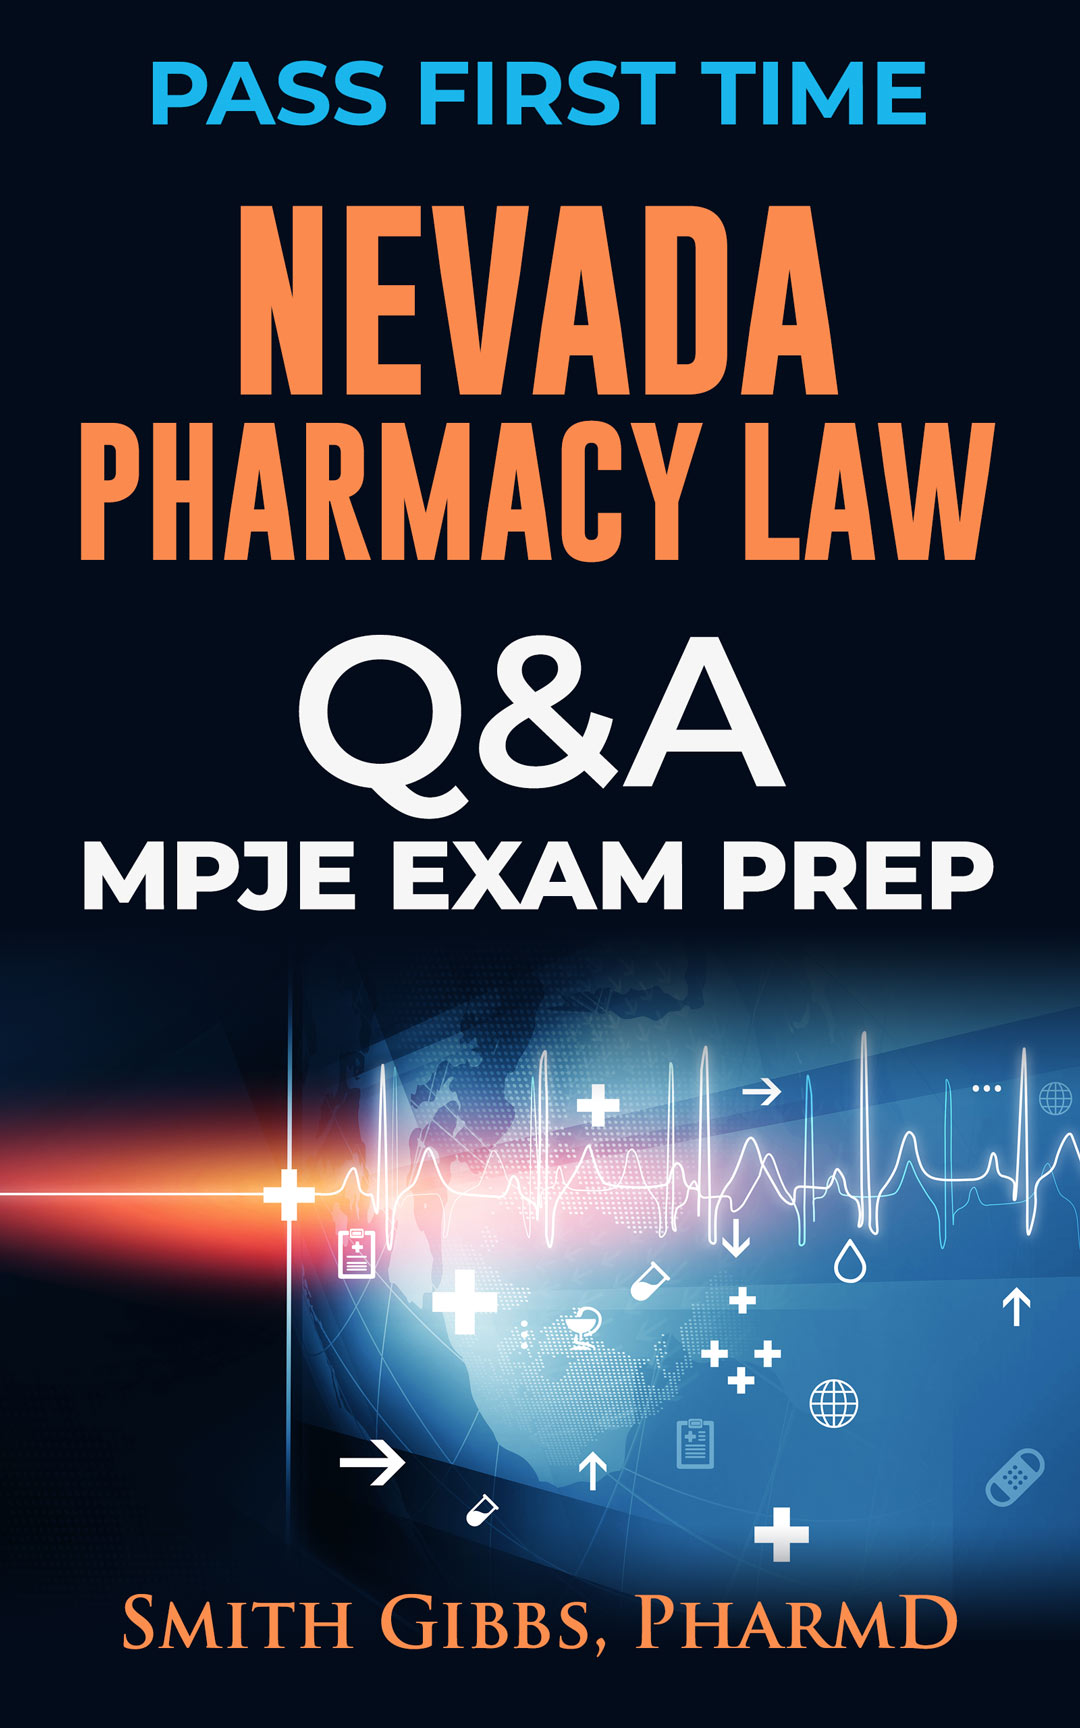 Nevada Pharmacy Law MPJE Exam Prep Q & A